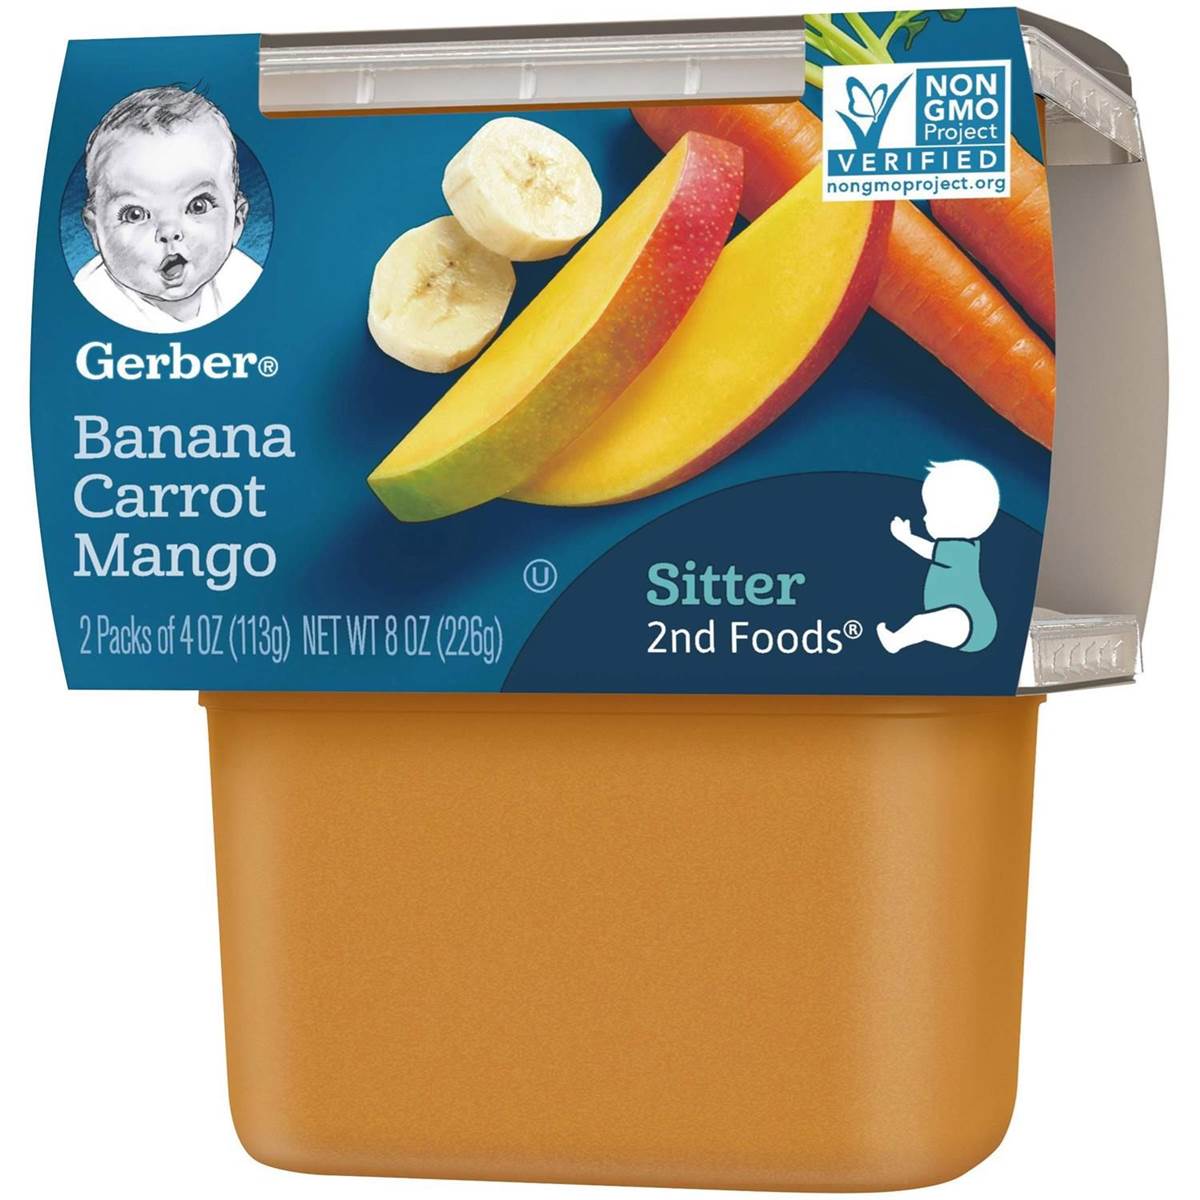 Gerber 2nd Foods for Sitter - Banana Carrot Mango